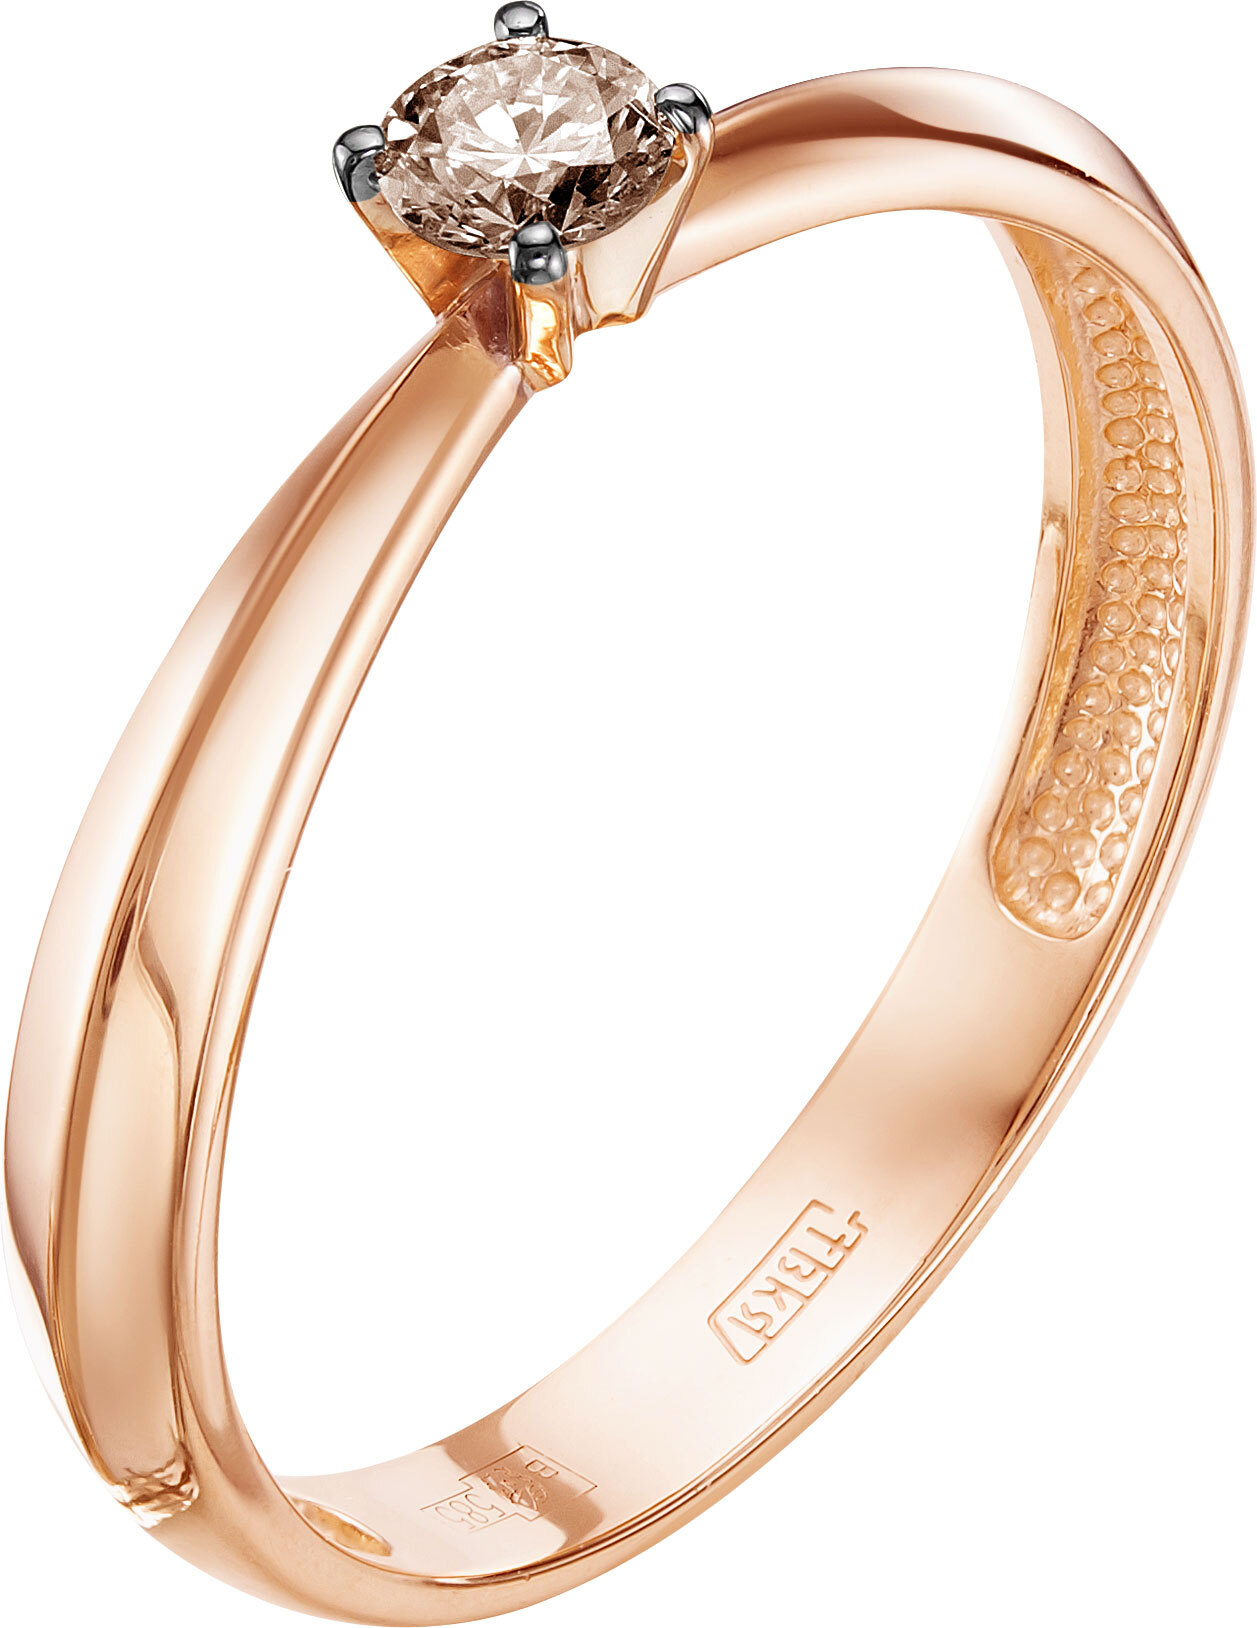 Золотое кольцо для предложения. Золотое кольцо Vesna Jewelry 1836-151-09-00 с бриллиантами. Помолвочное кольцо с бриллиантом красное золото. Золотое кольцо с бриллиантами артикул 7072008. Кольцо для предложения.